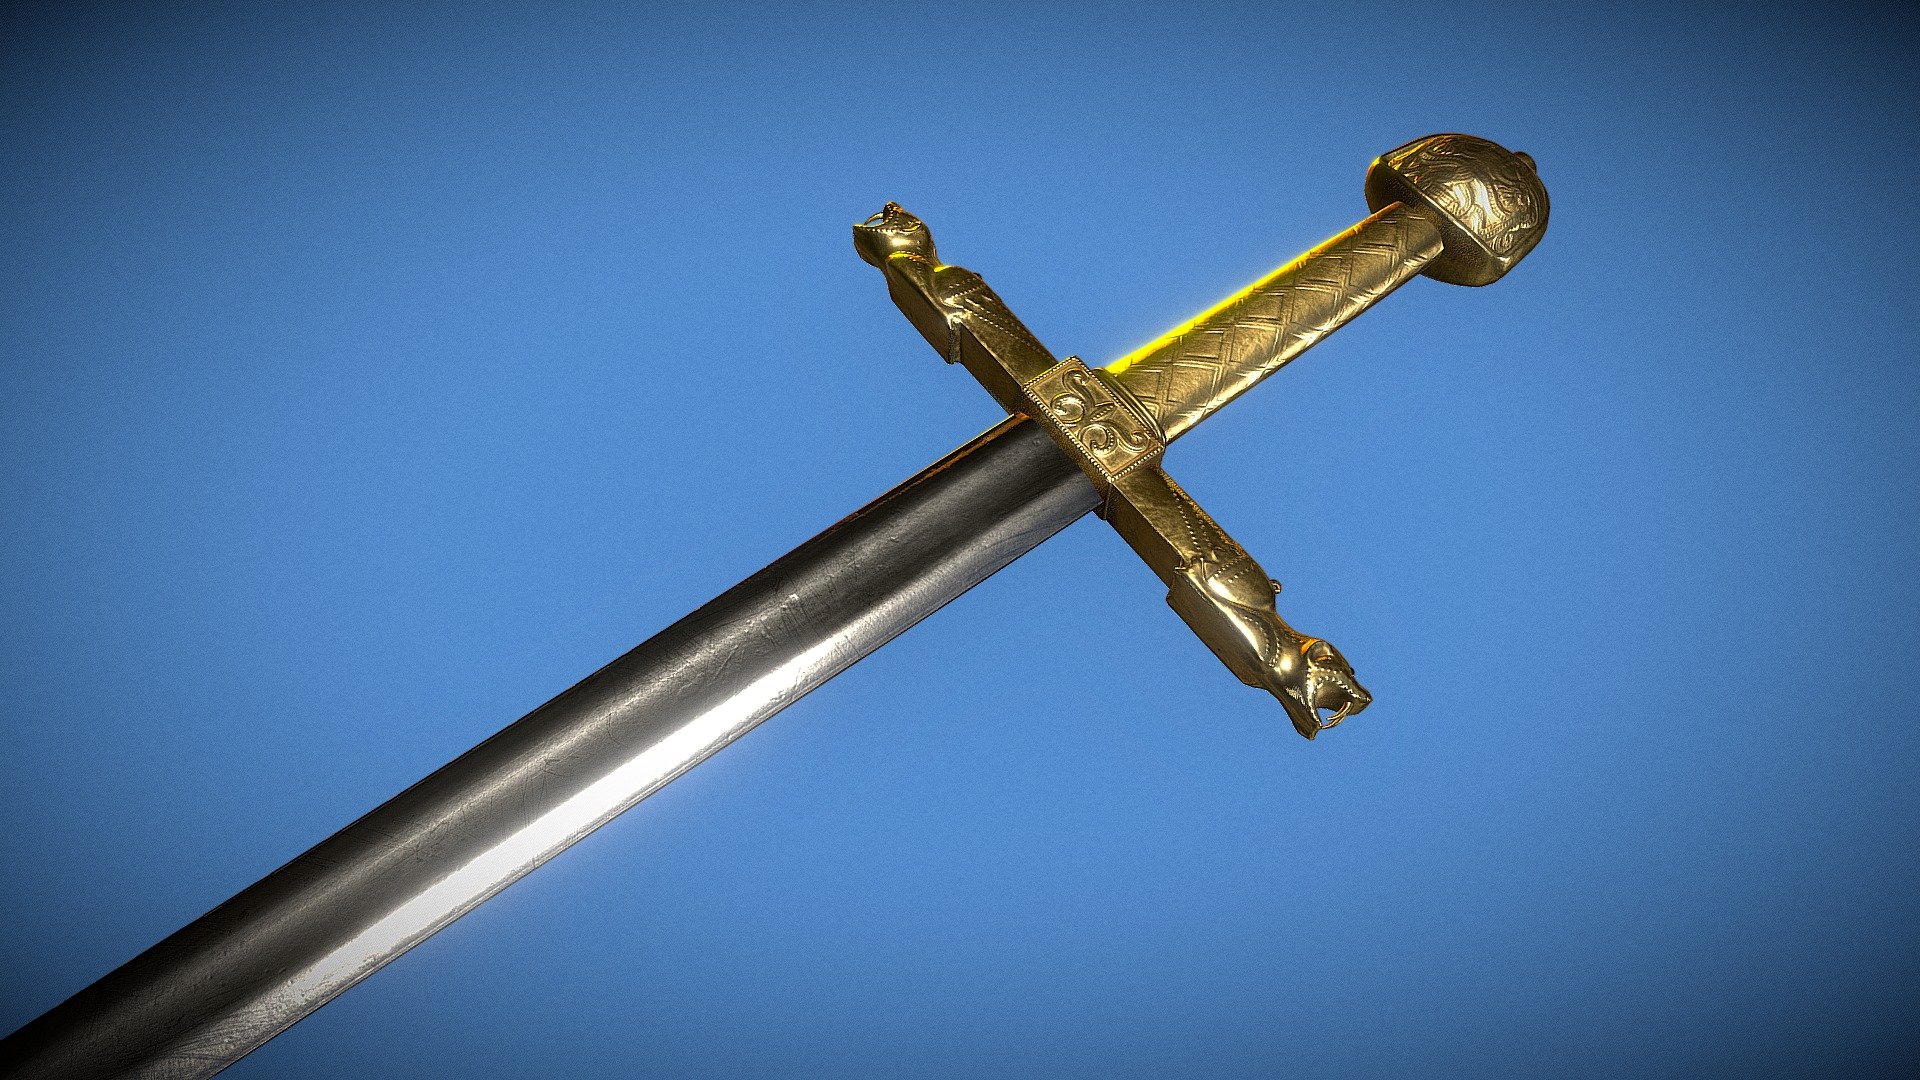 charlemagnes sword joyeuse